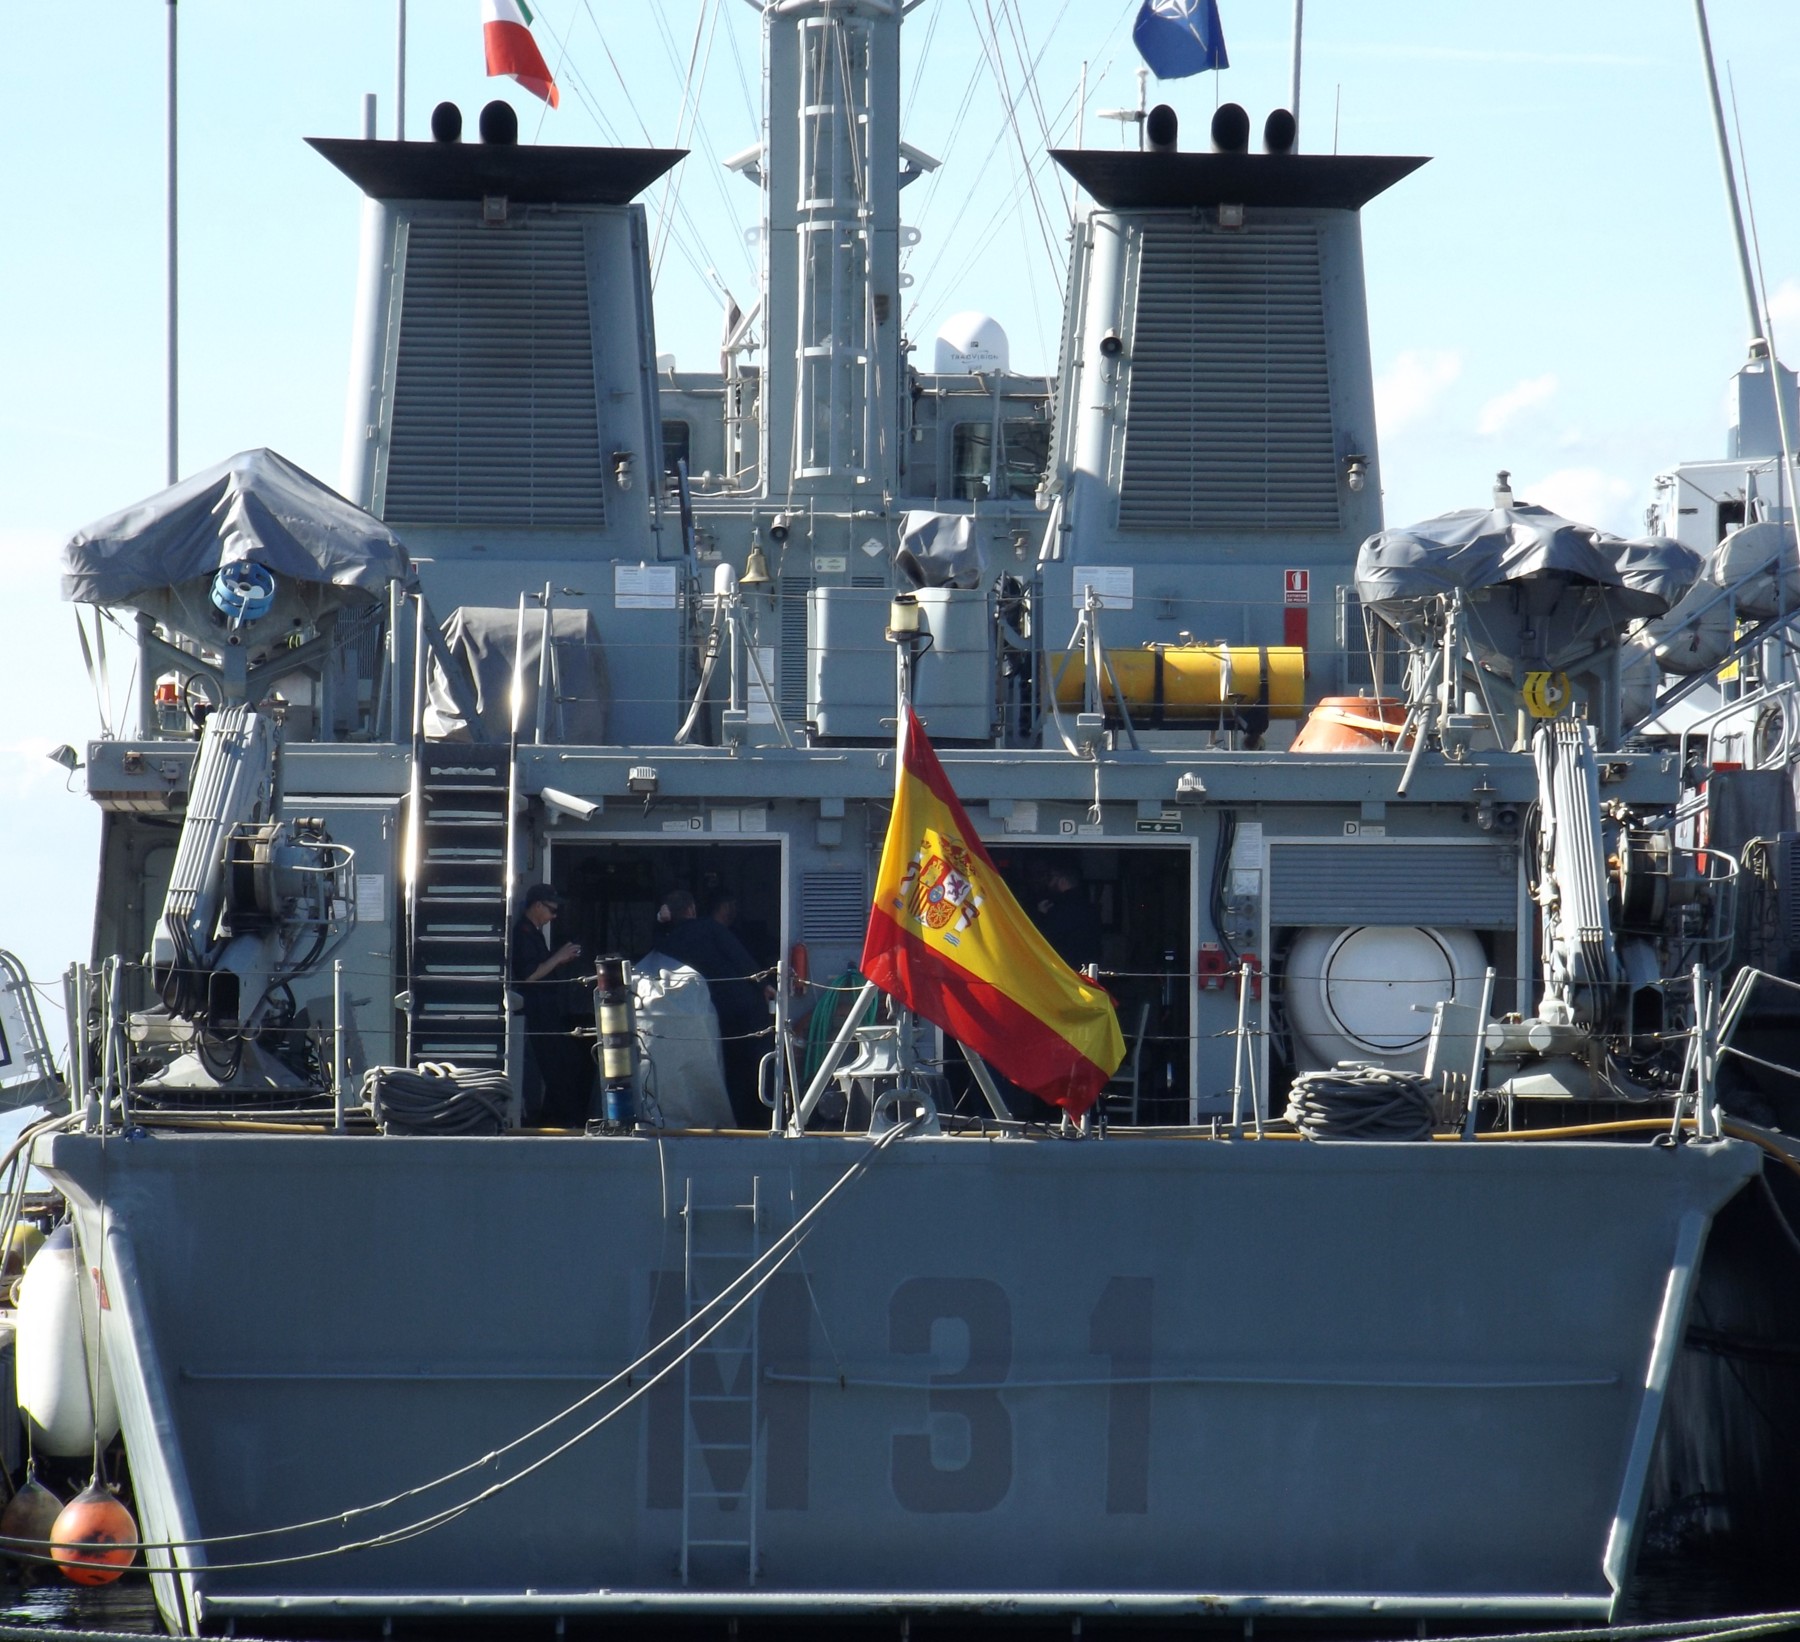 esps segura m31 class minehunter spanish navy nato snmcmg-2 trieste italy 05